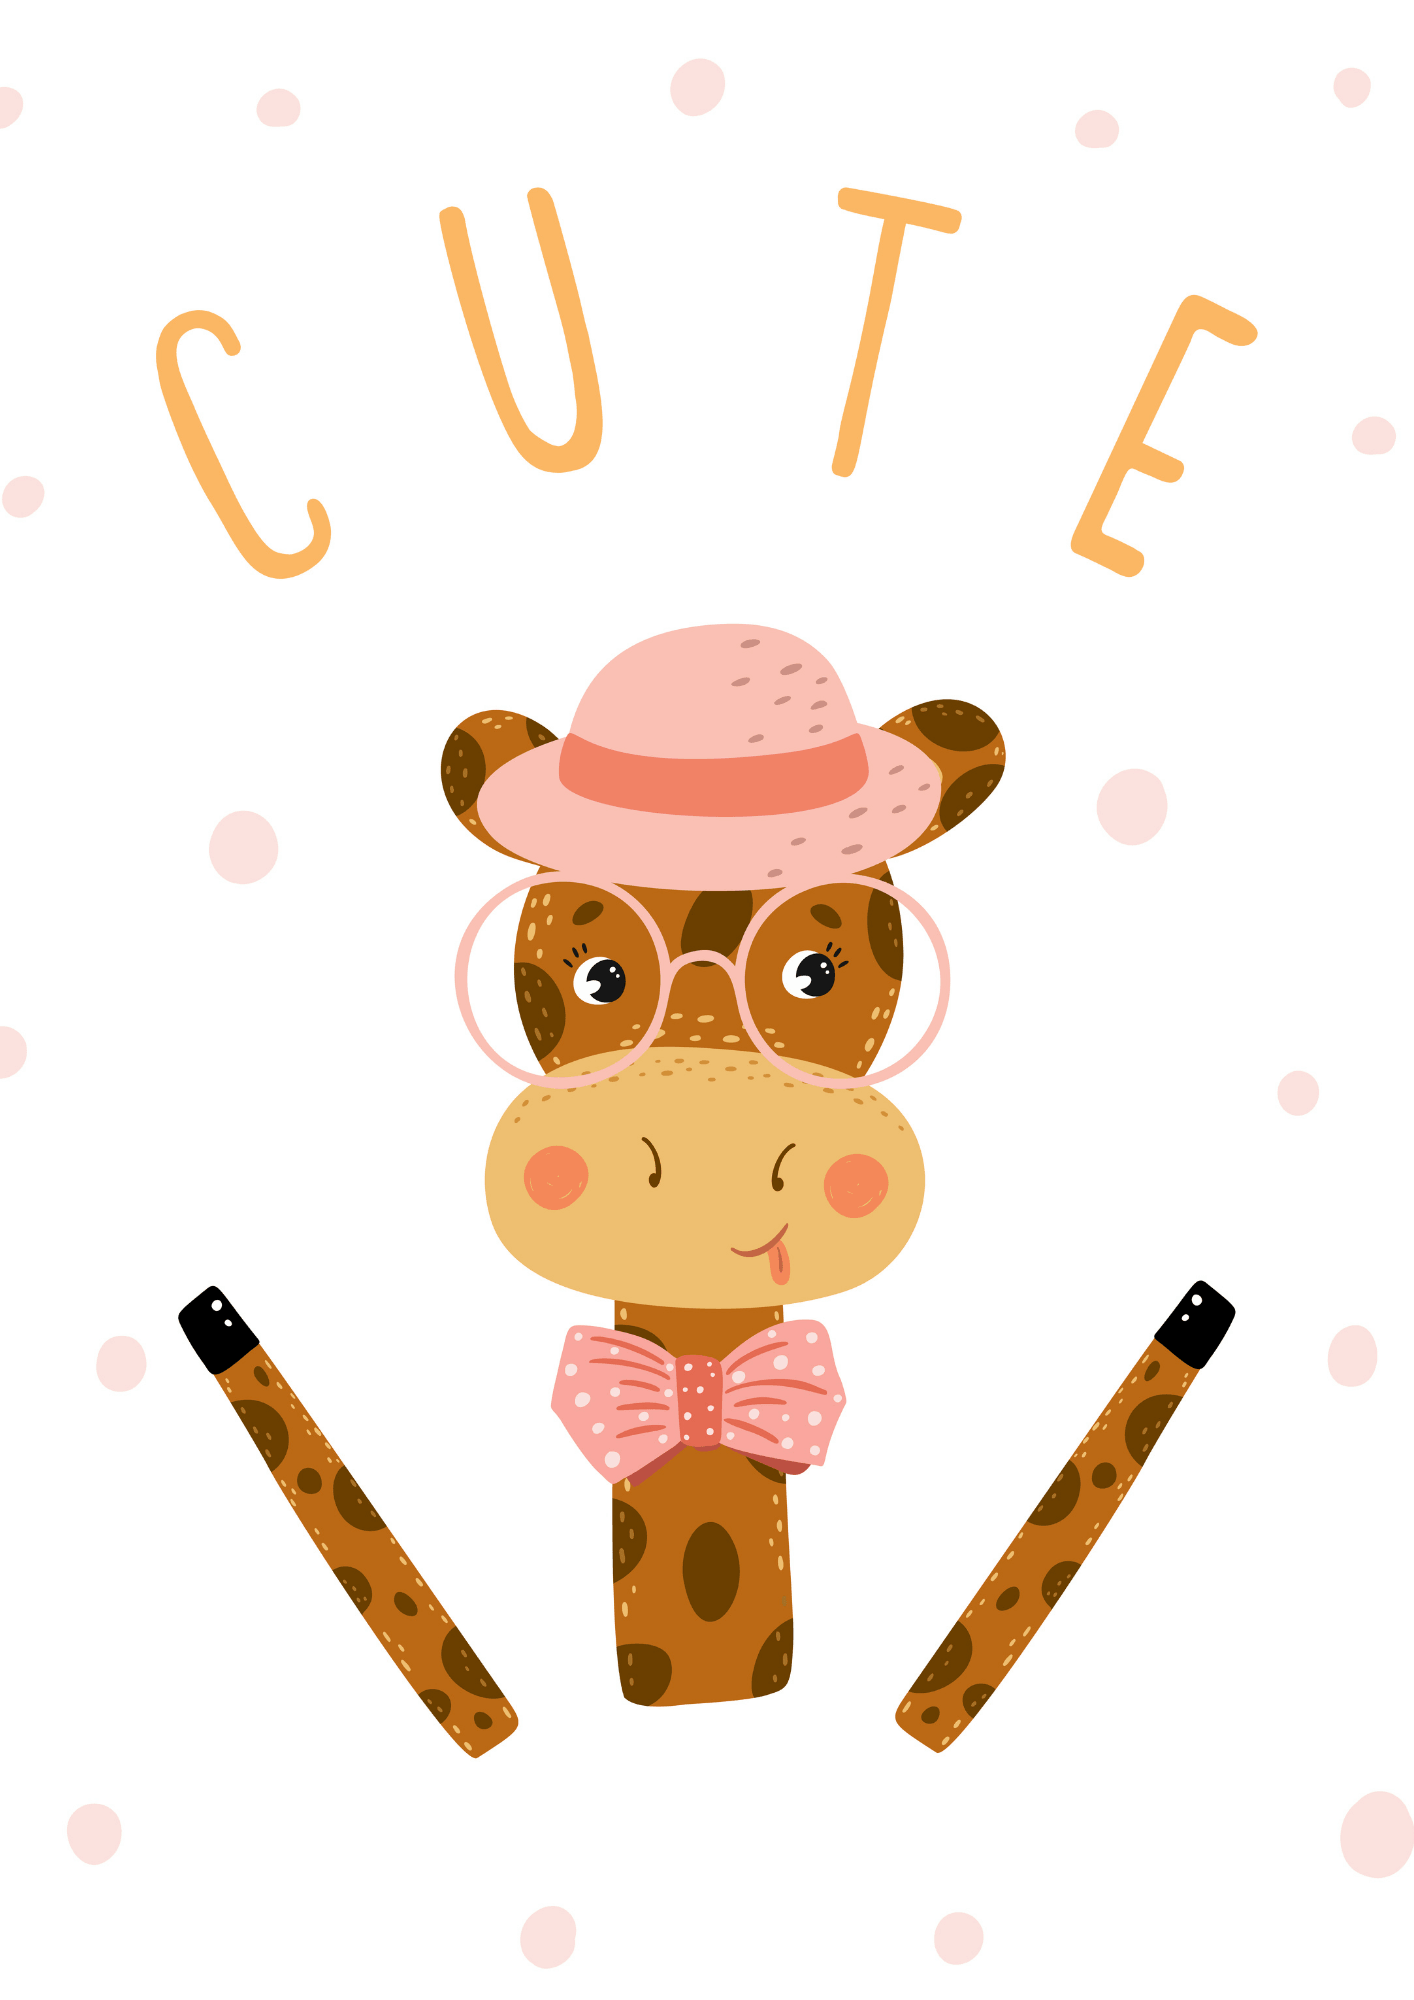 Cute Giraffe With Glasses - The Ditzy Dodo